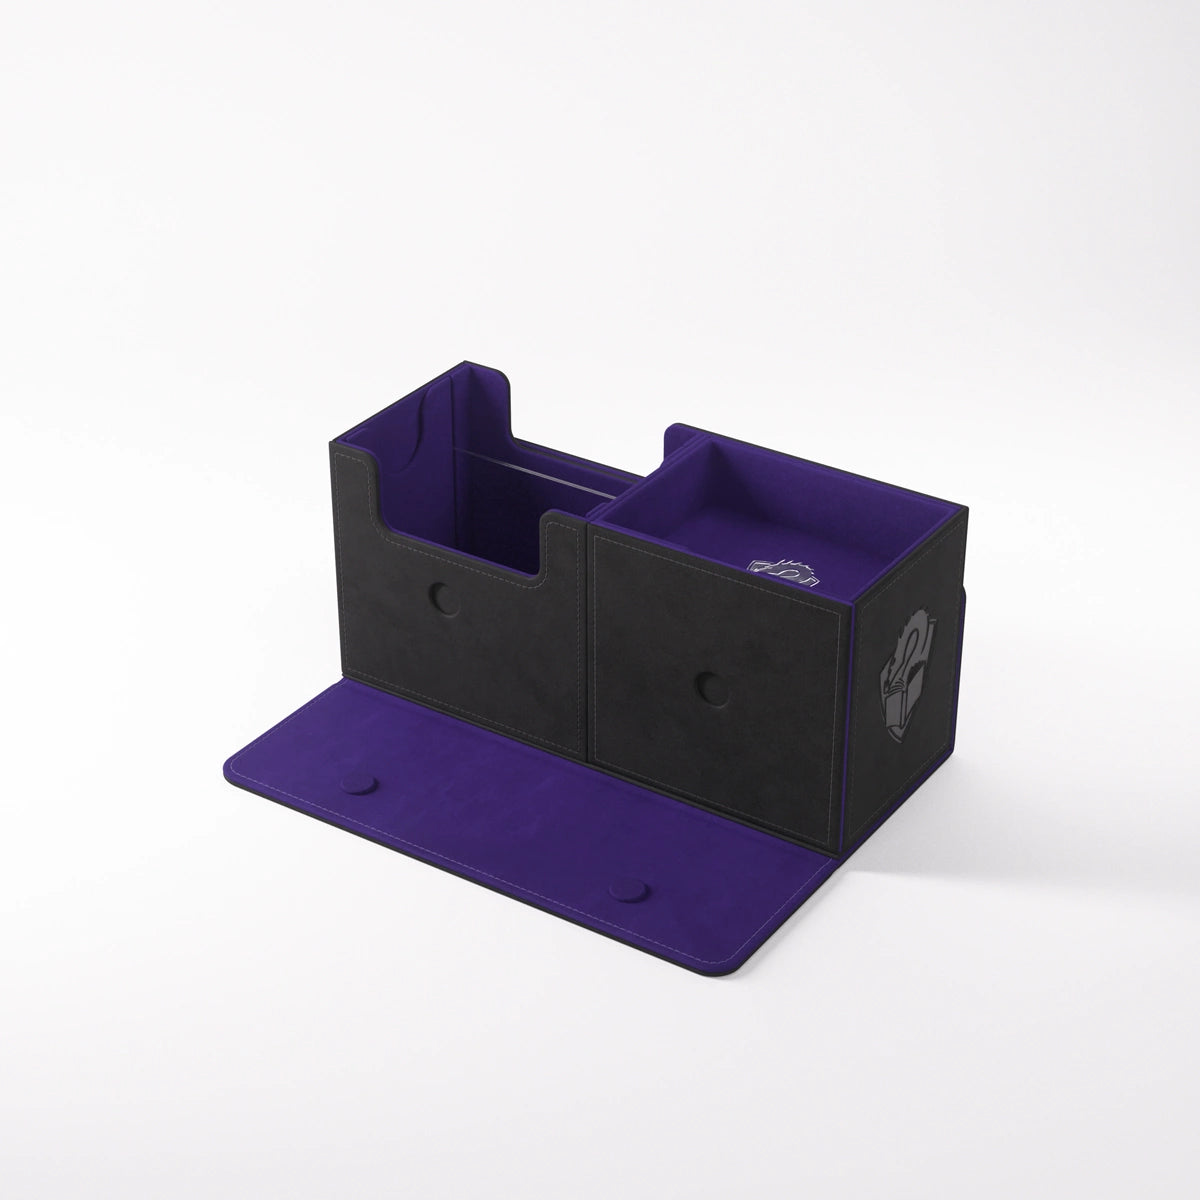 Deck Box: The Academic 133+ XL Black/Purple Tolarian Edition